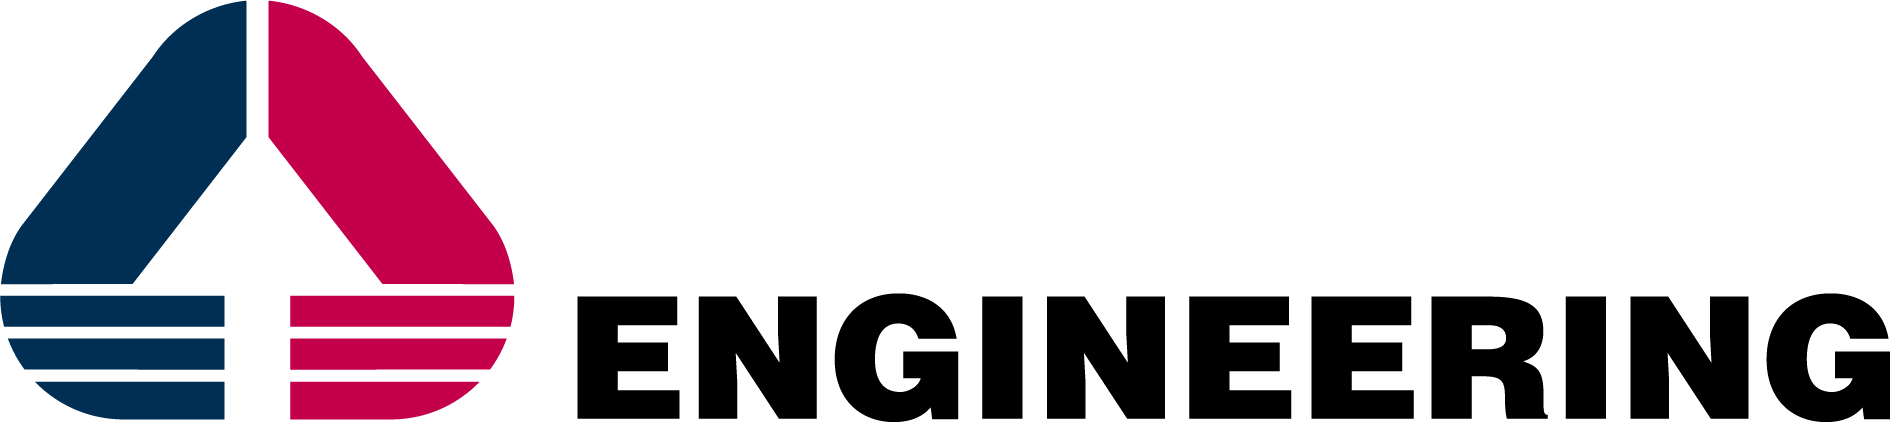 Engineering Logo - File:Engineering logo.png - Wikimedia Commons